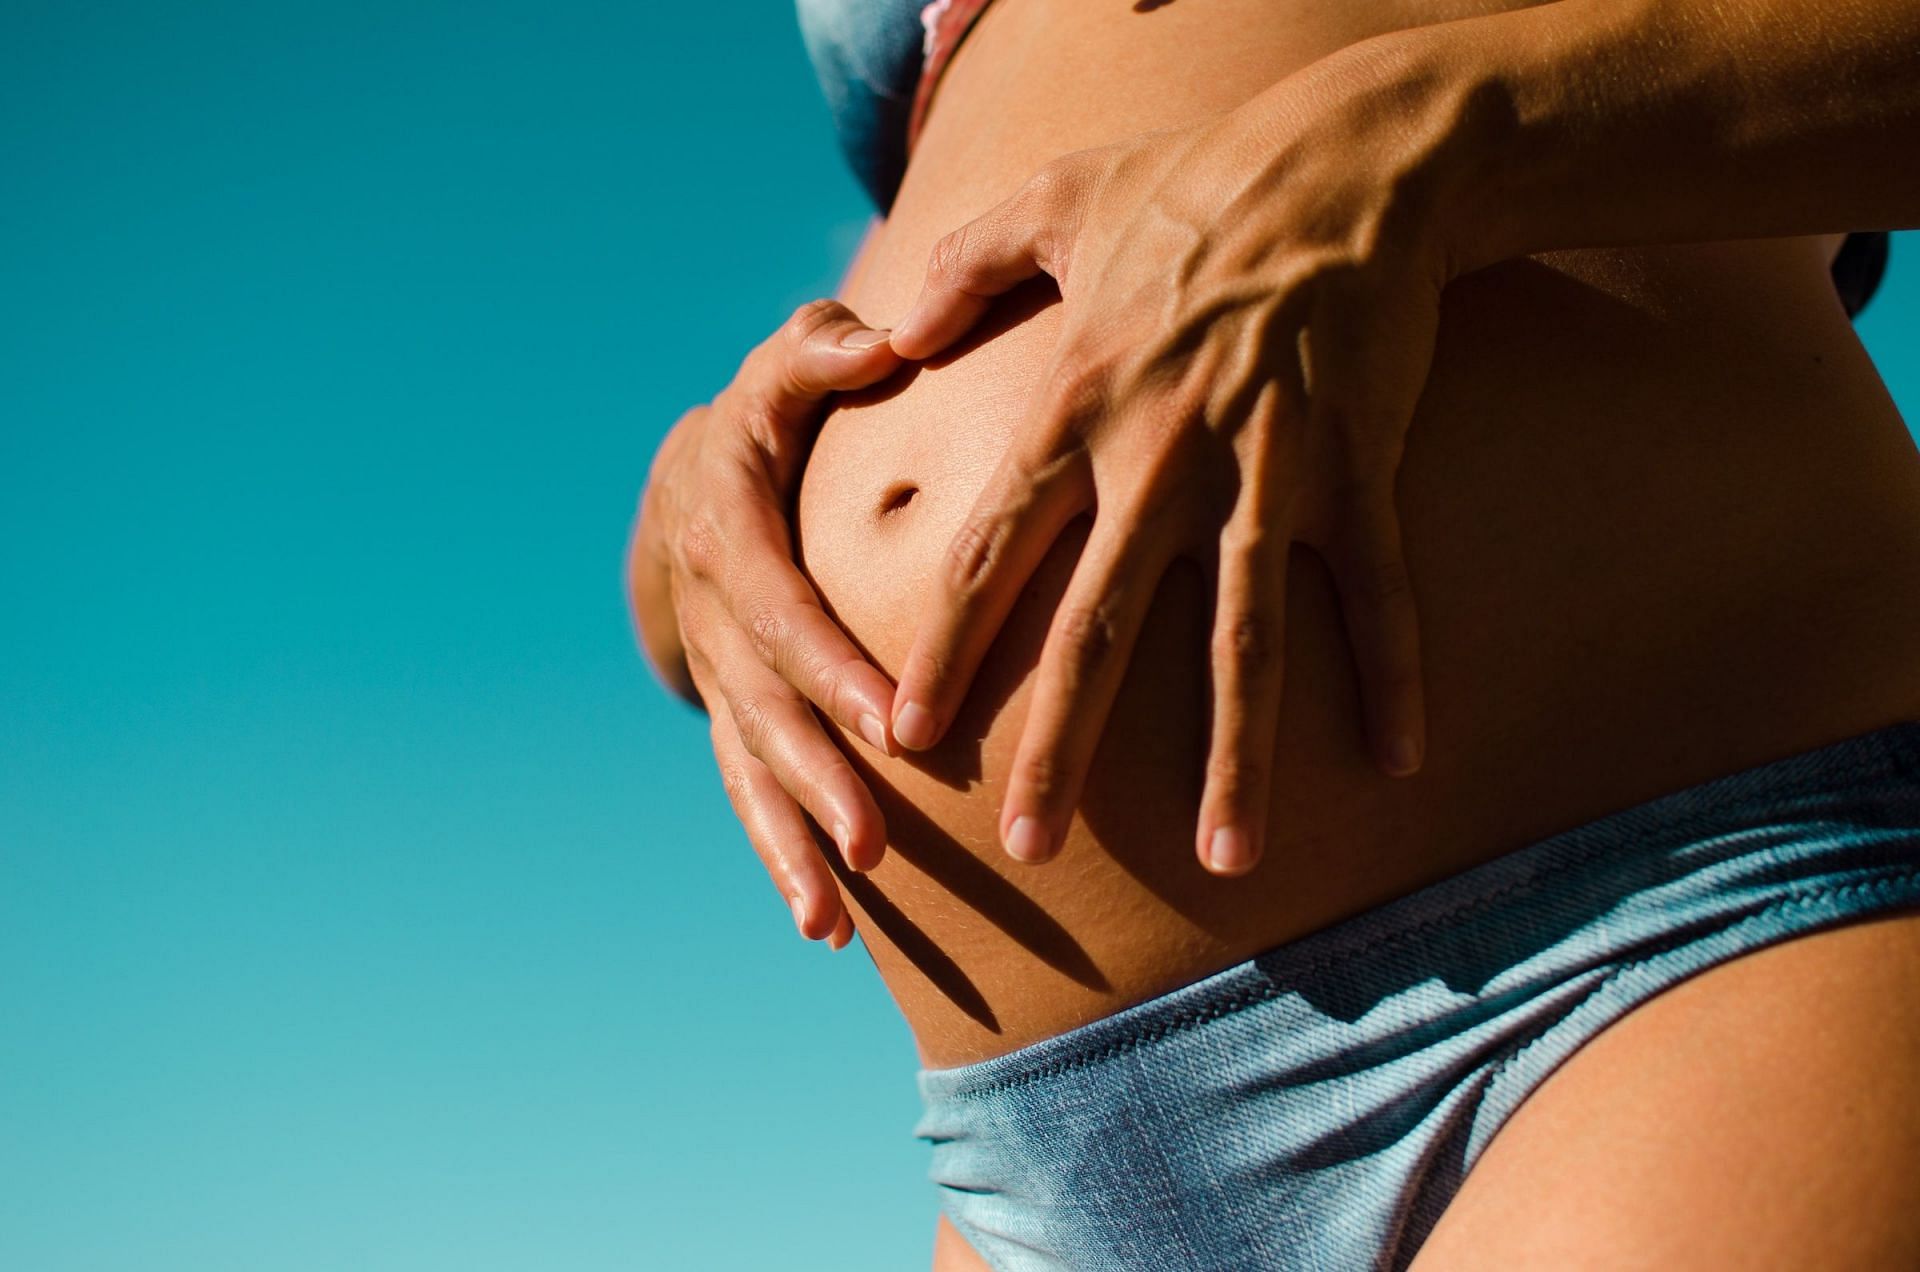 Lifting weights during pregnancy (Image via Unsplash/Ignacio Campo)